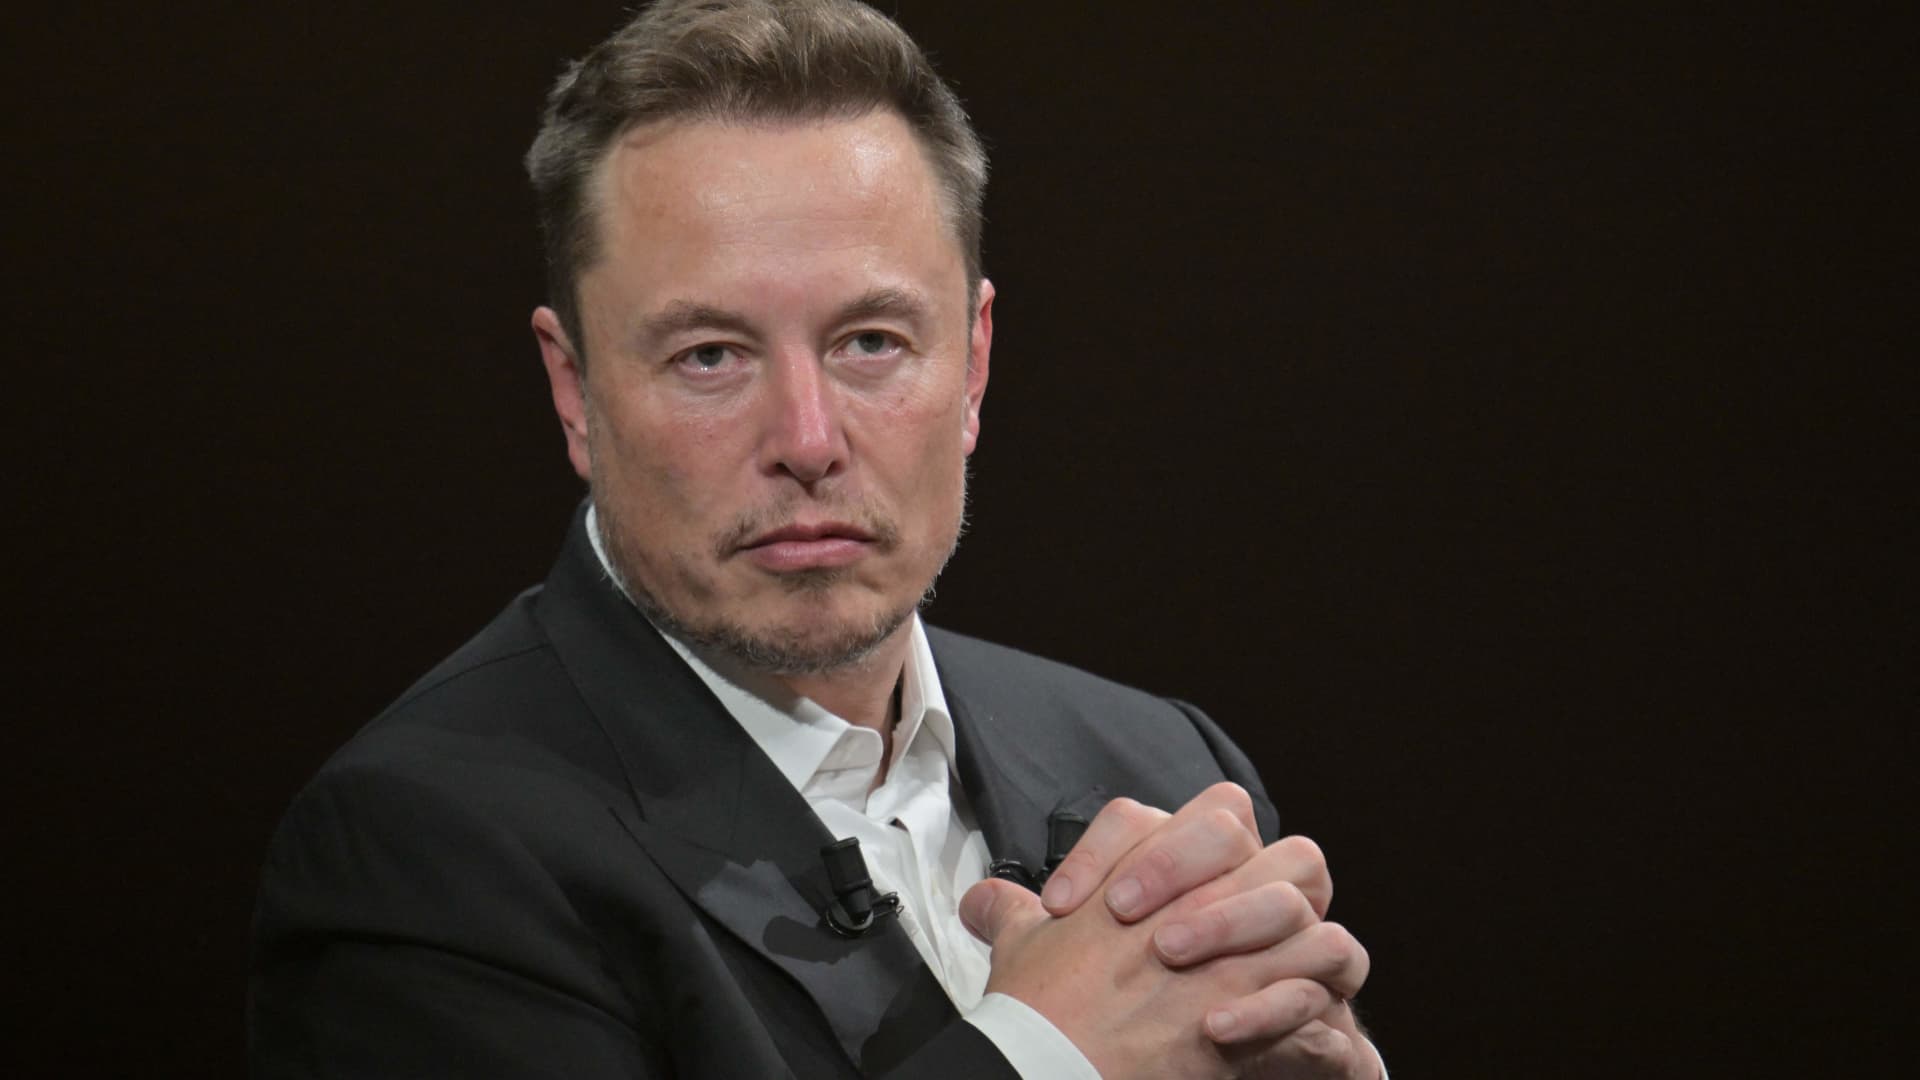 Elon Musk says he may need surgery